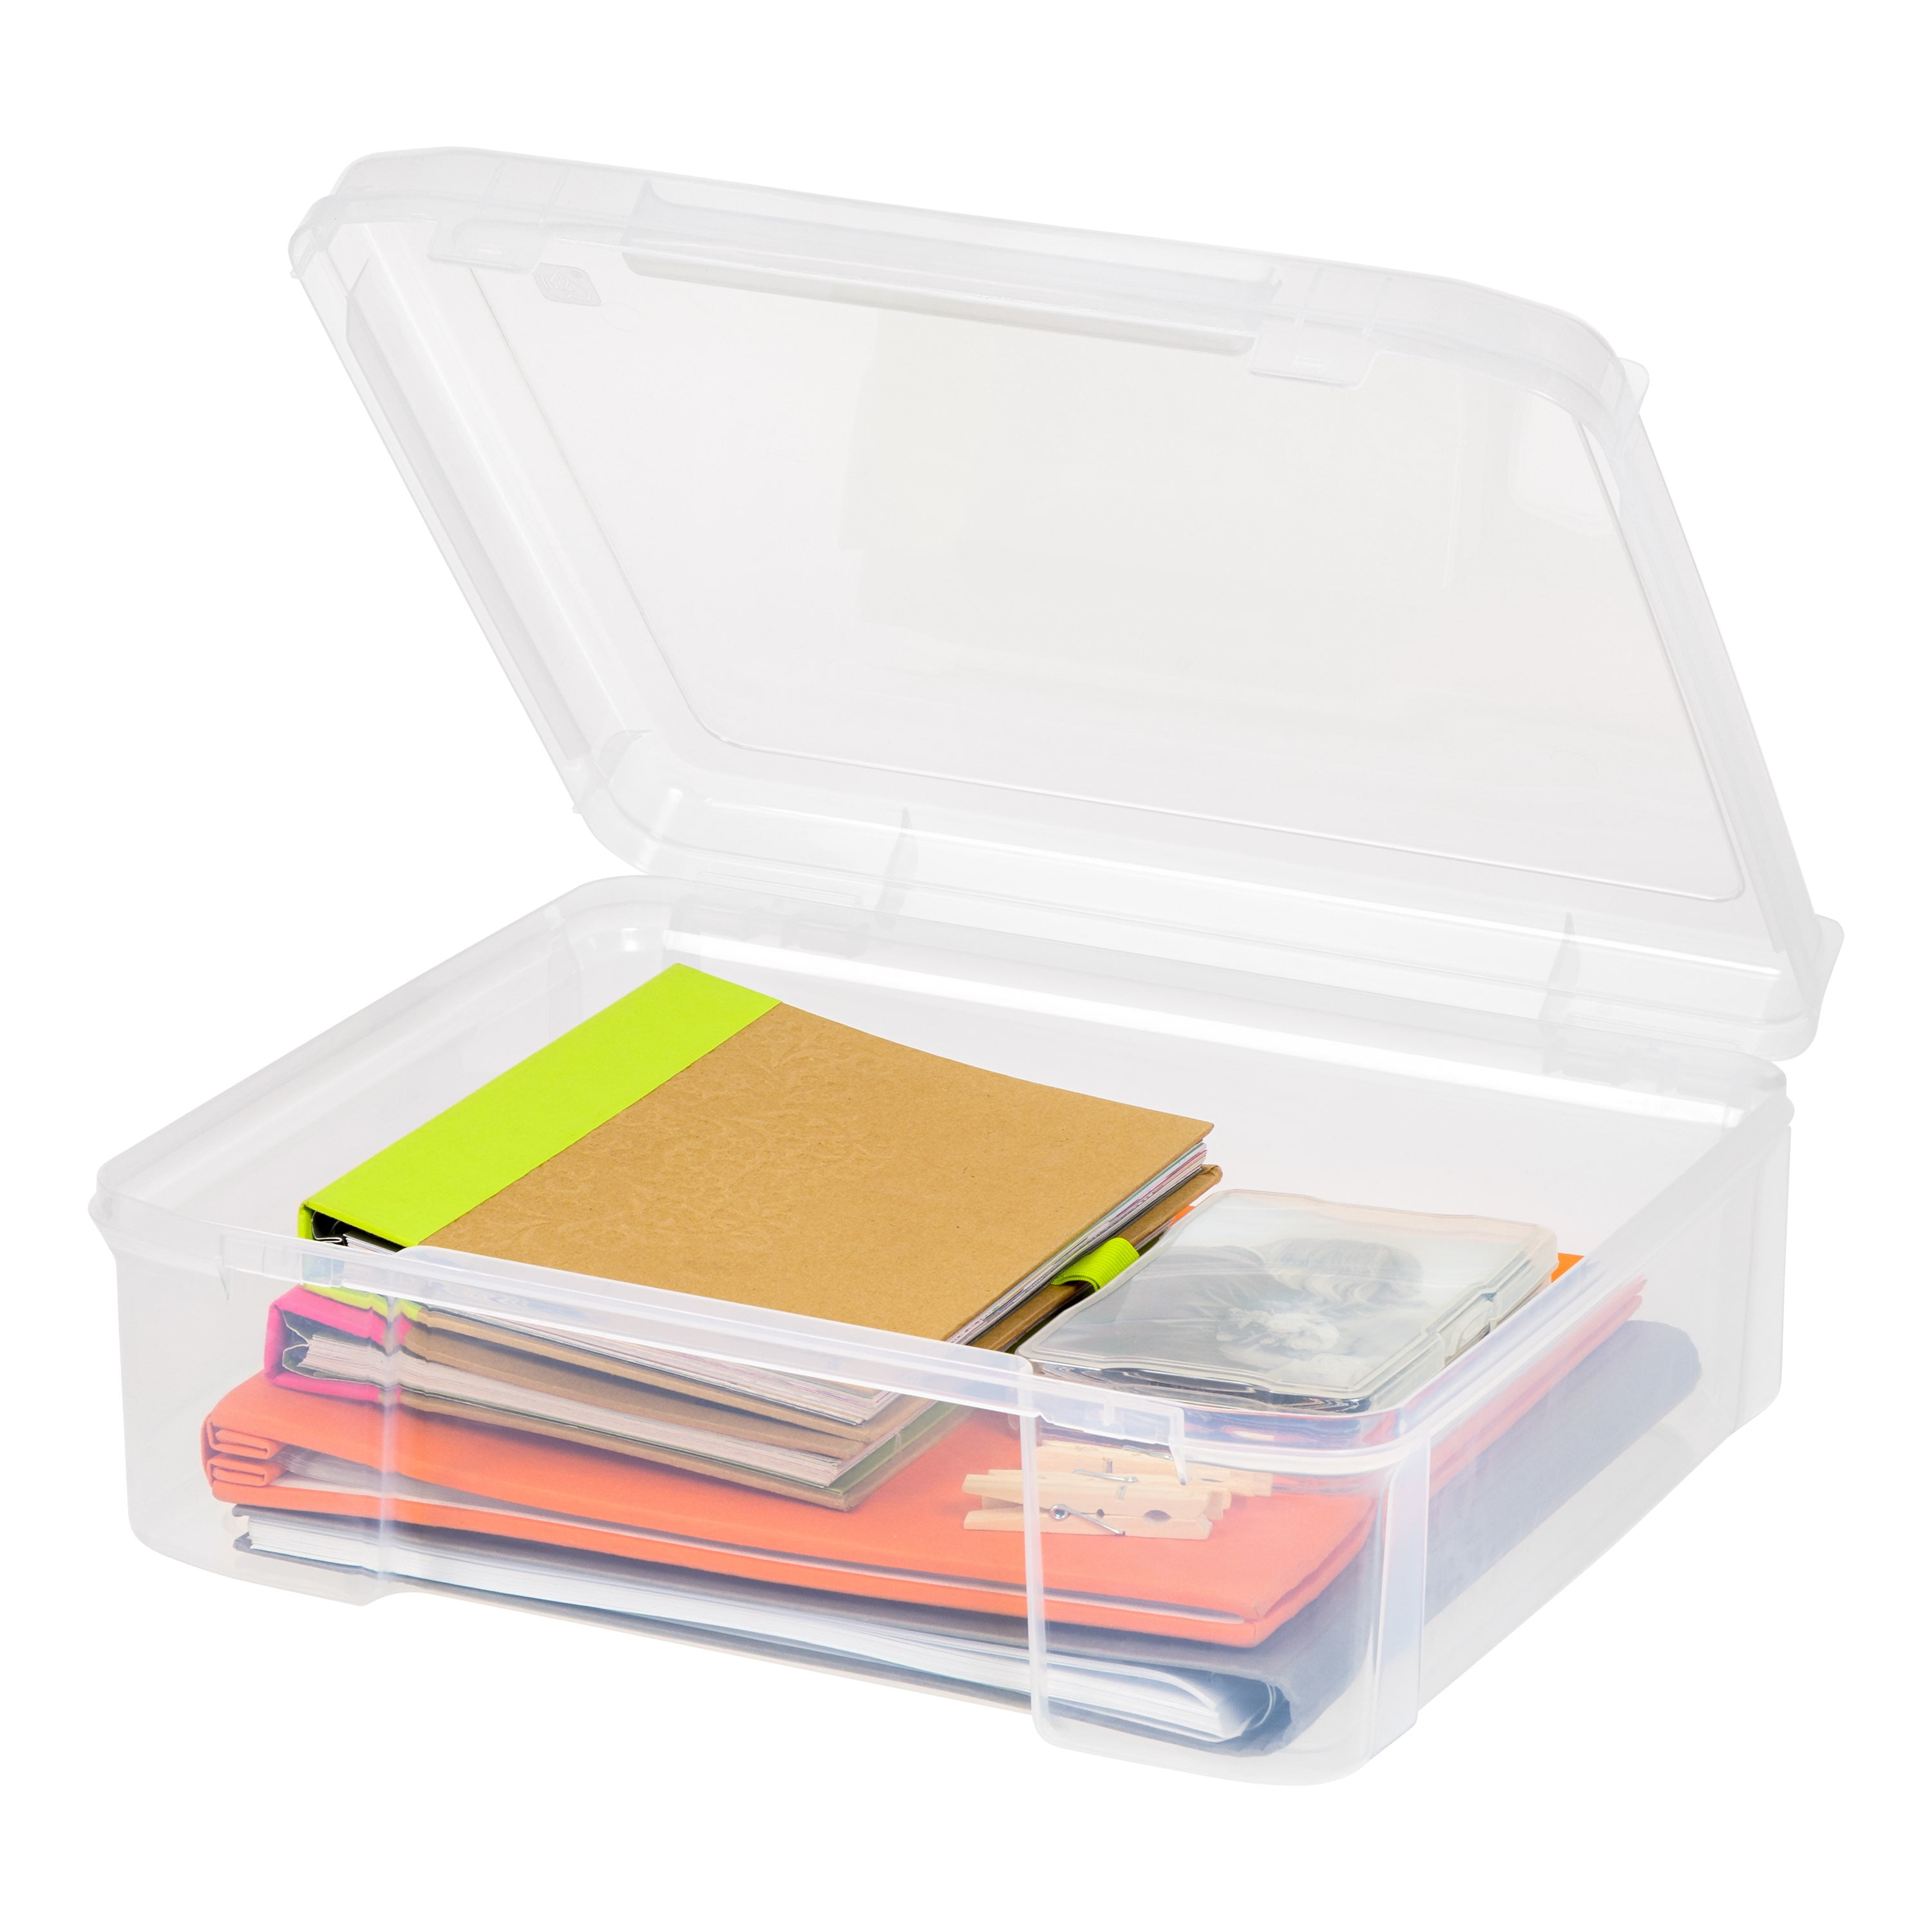 IRIS 14 in. x 14 in. Portable Scrapbook Case in Clear (Pack of 6